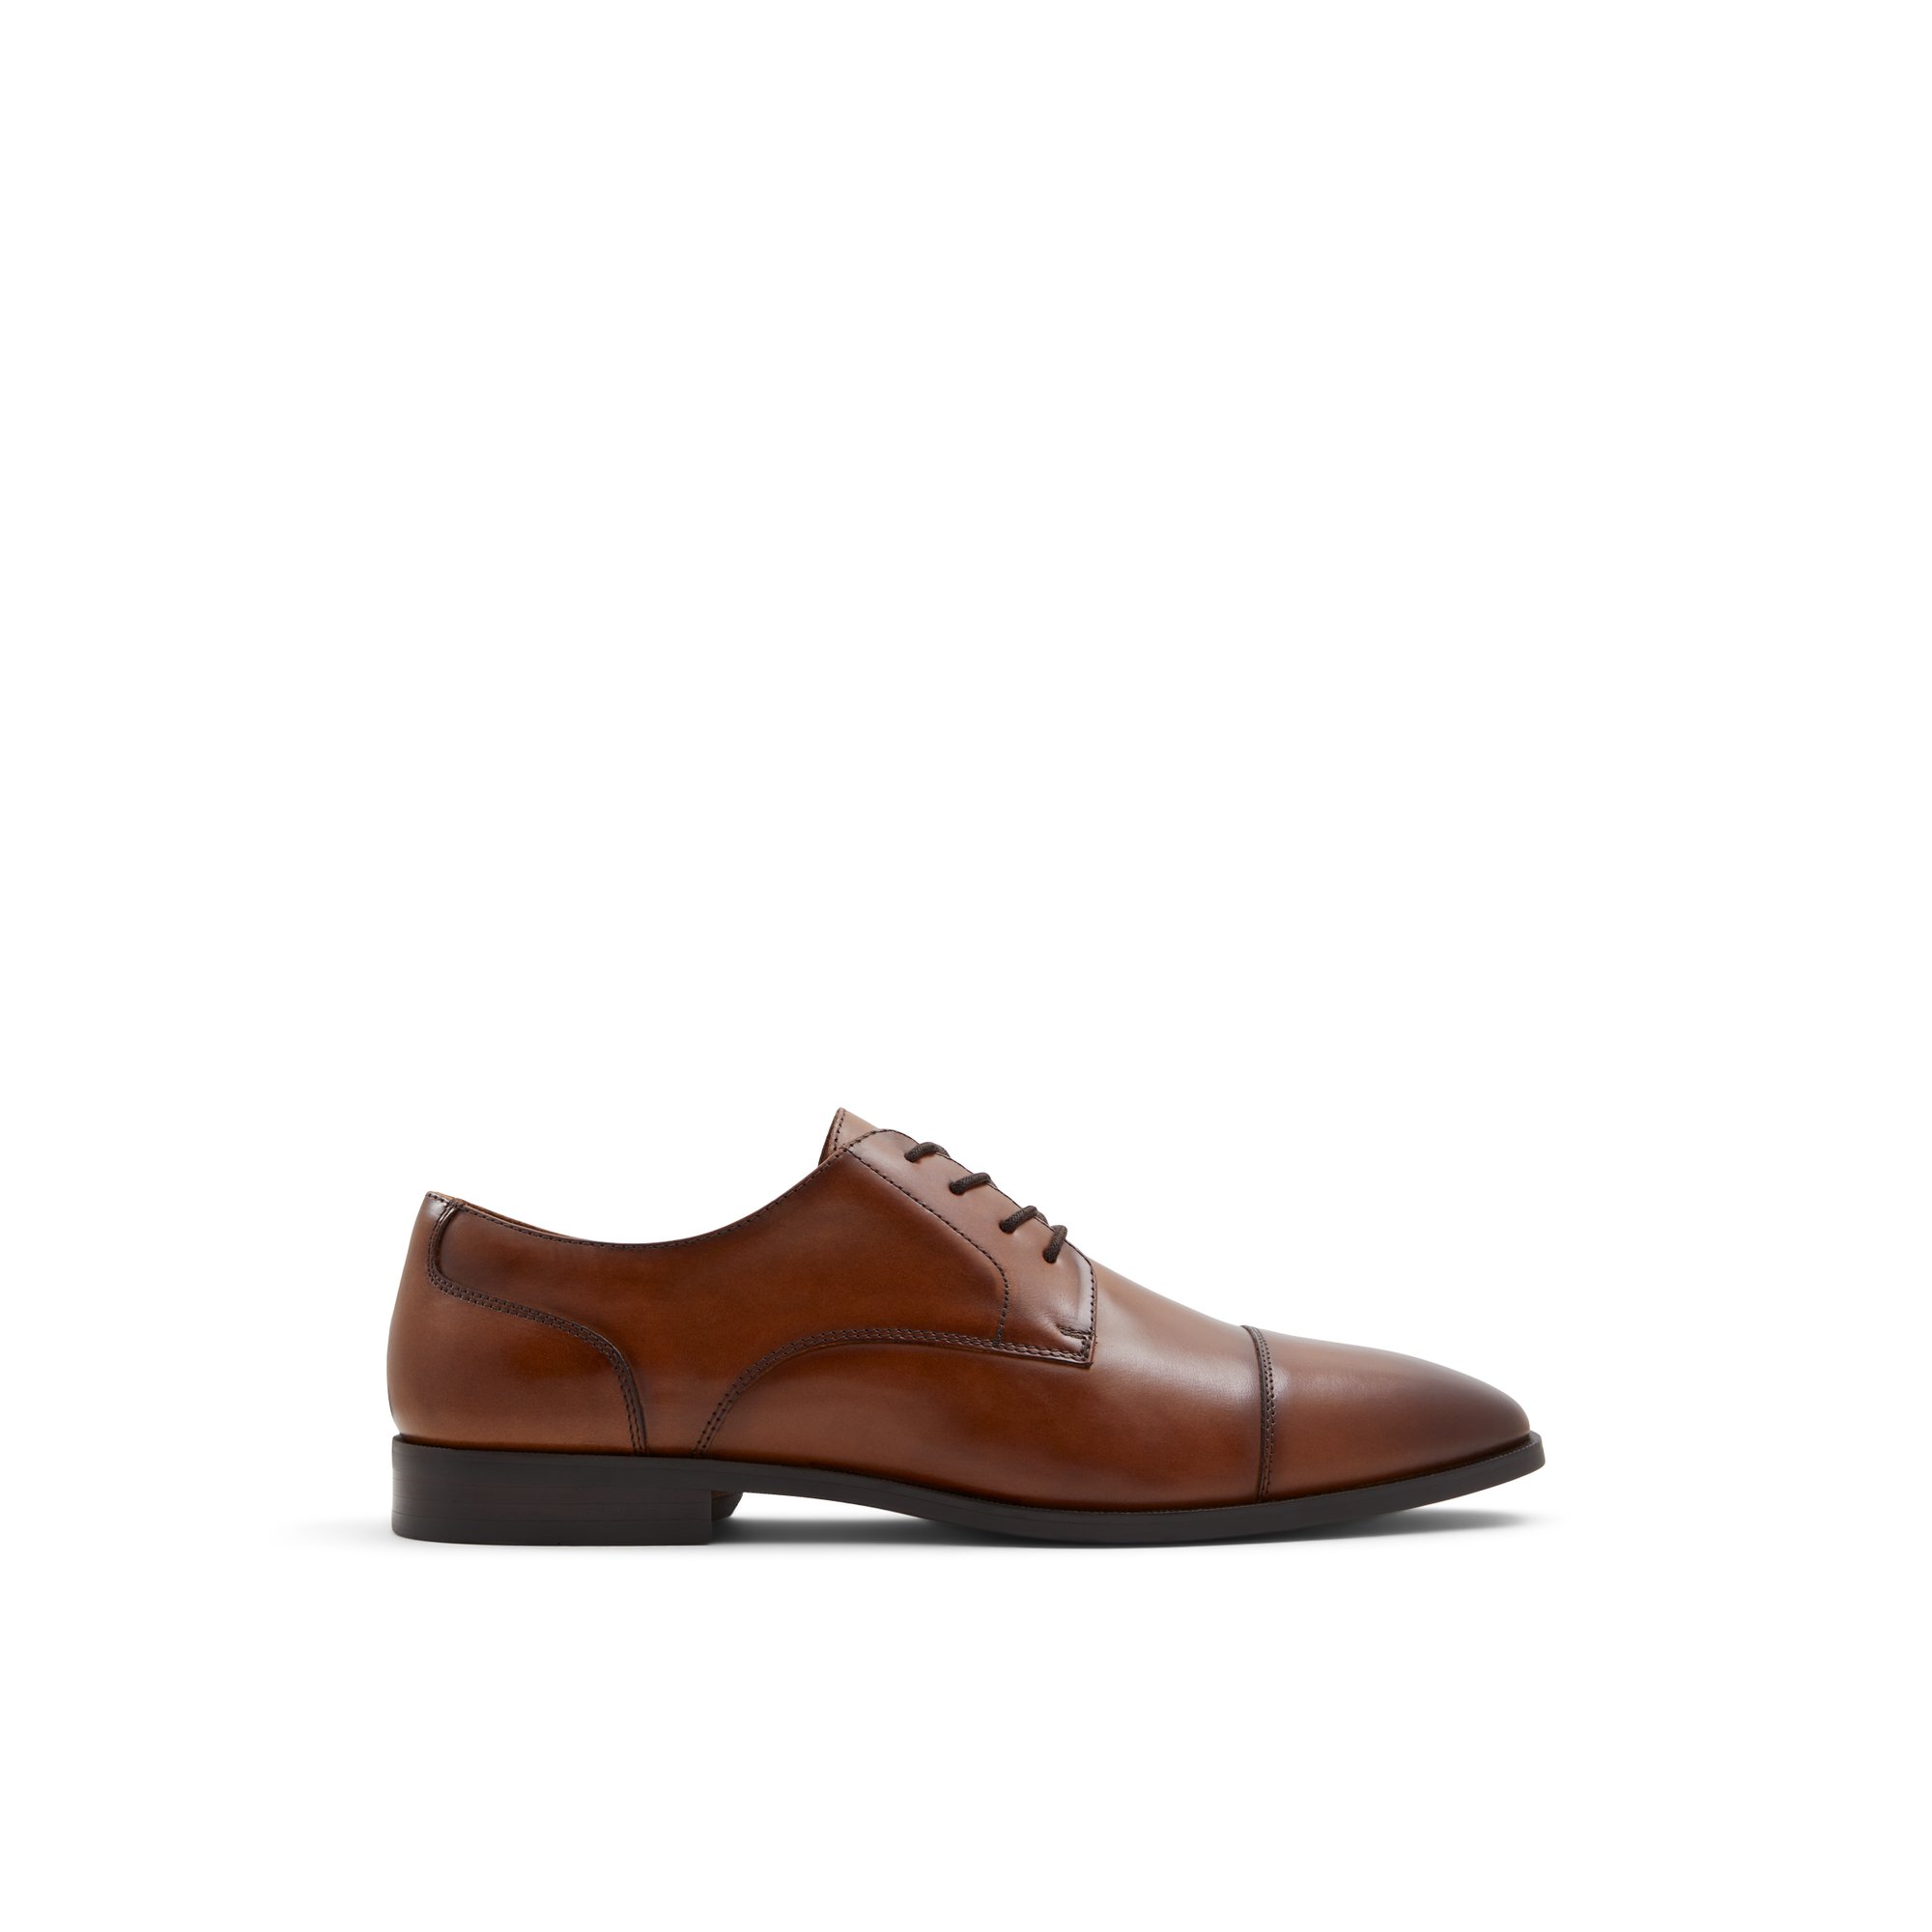 ALDO Callahan - Men's Dress Shoes - Brown